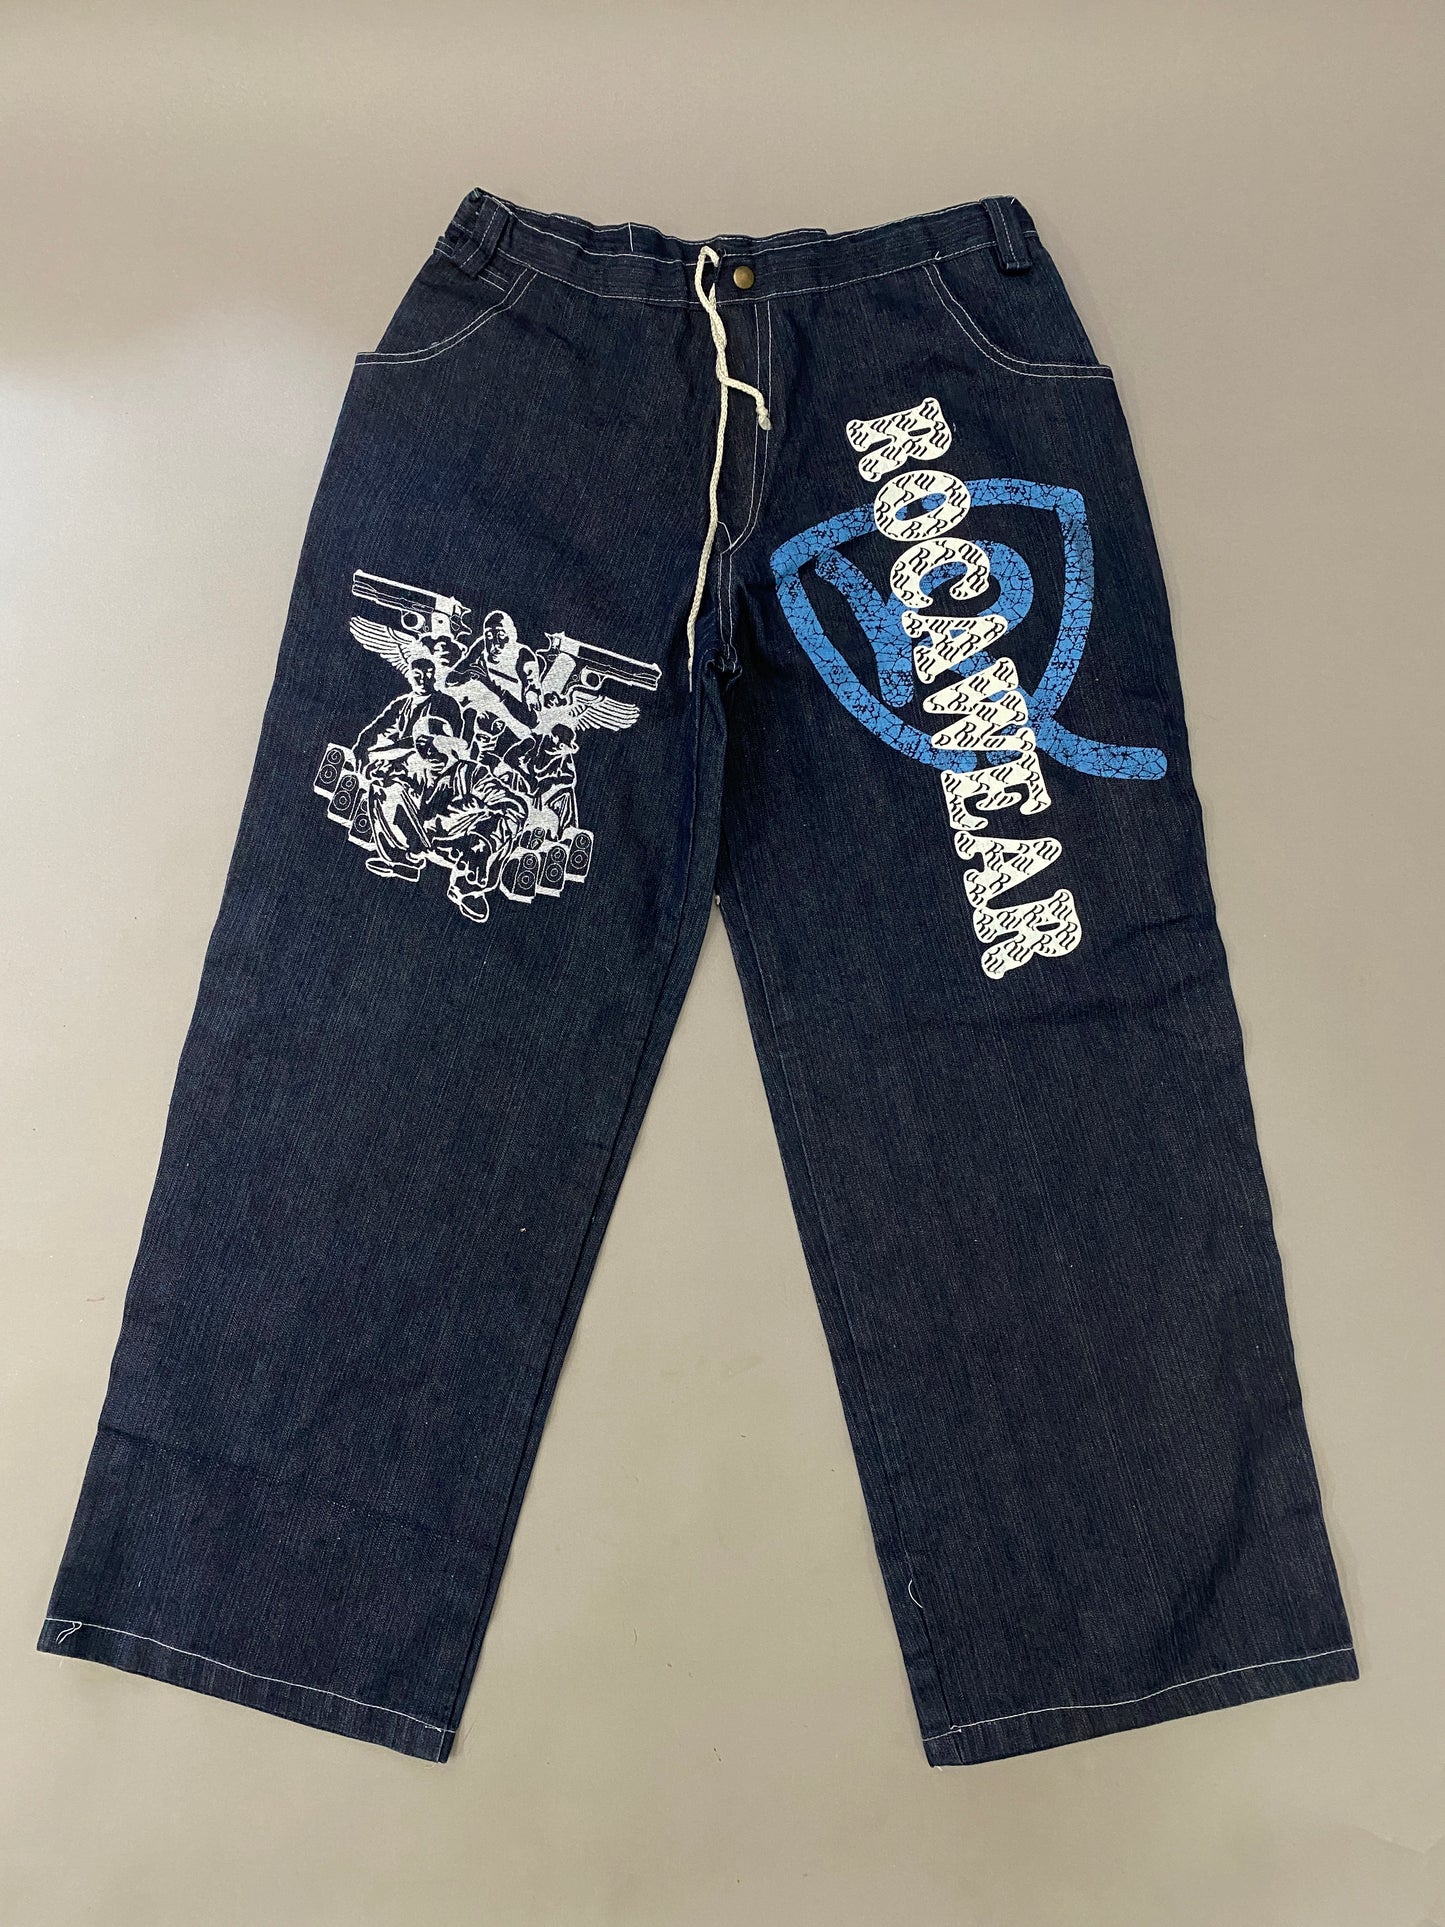 Jeans Tumbados Rocawear